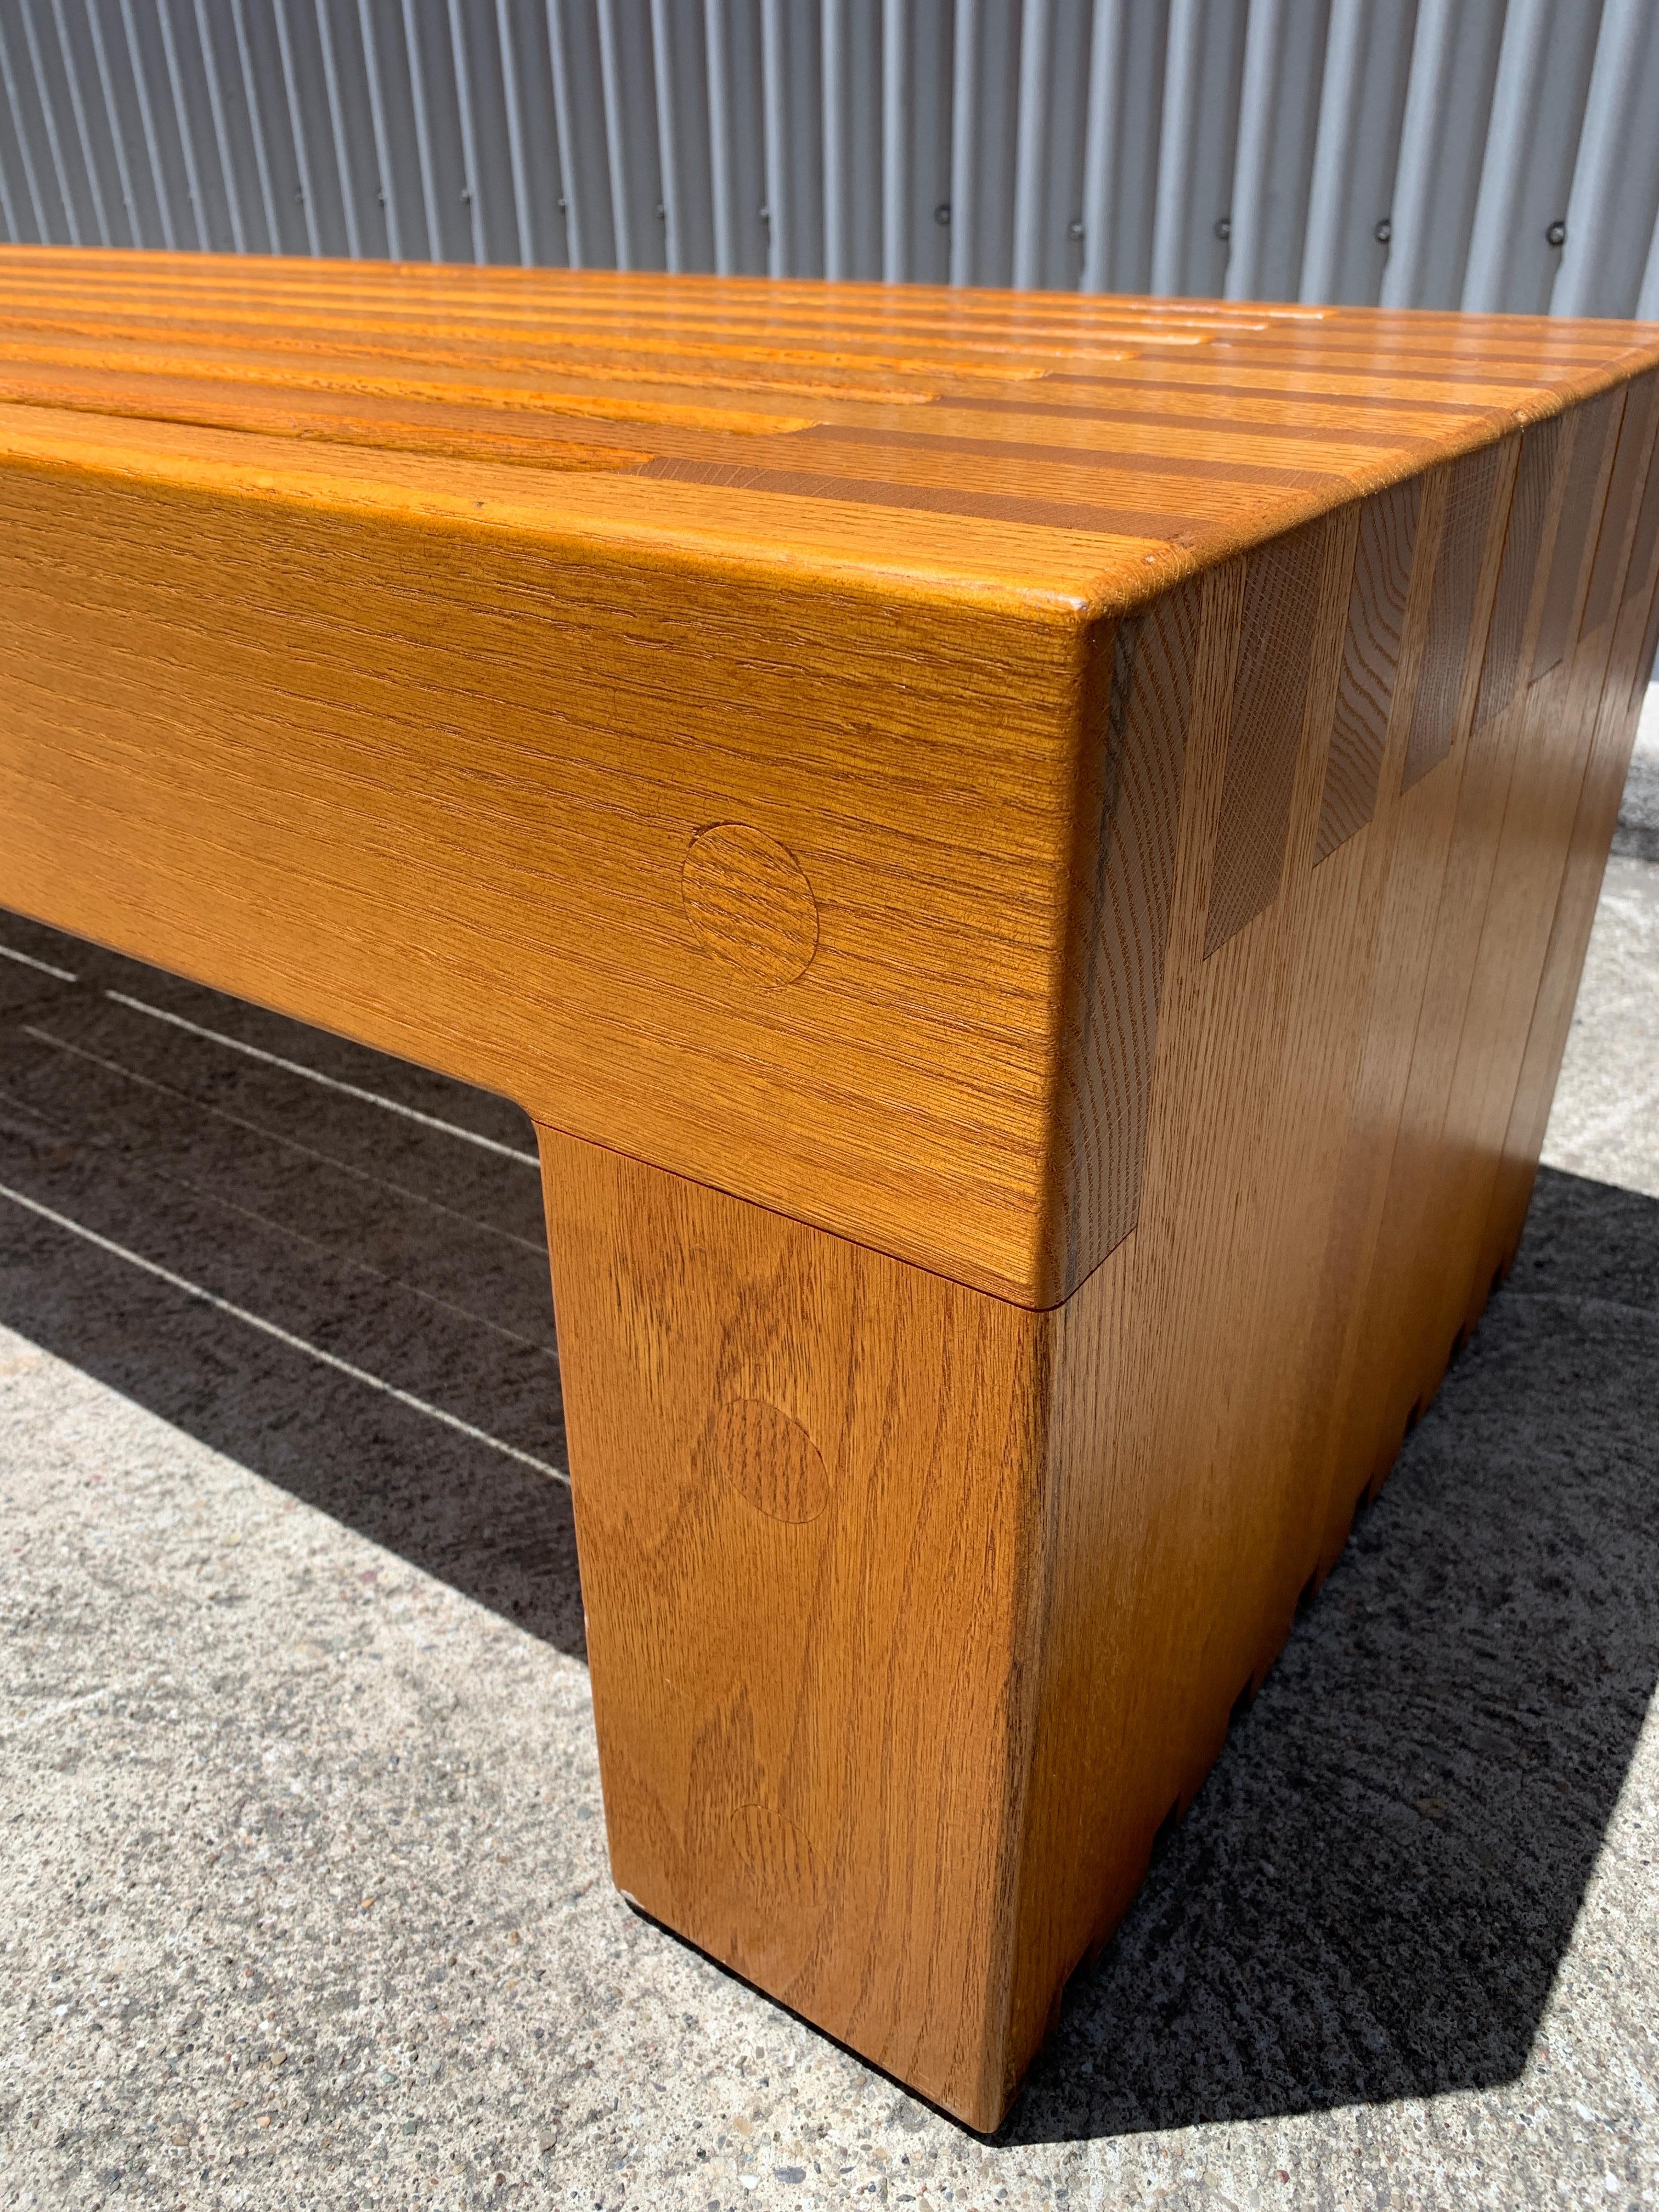 Late 20th Century Impressive Solid Oak Bench by Mexican Modernist Architect Ricardo Legorretta